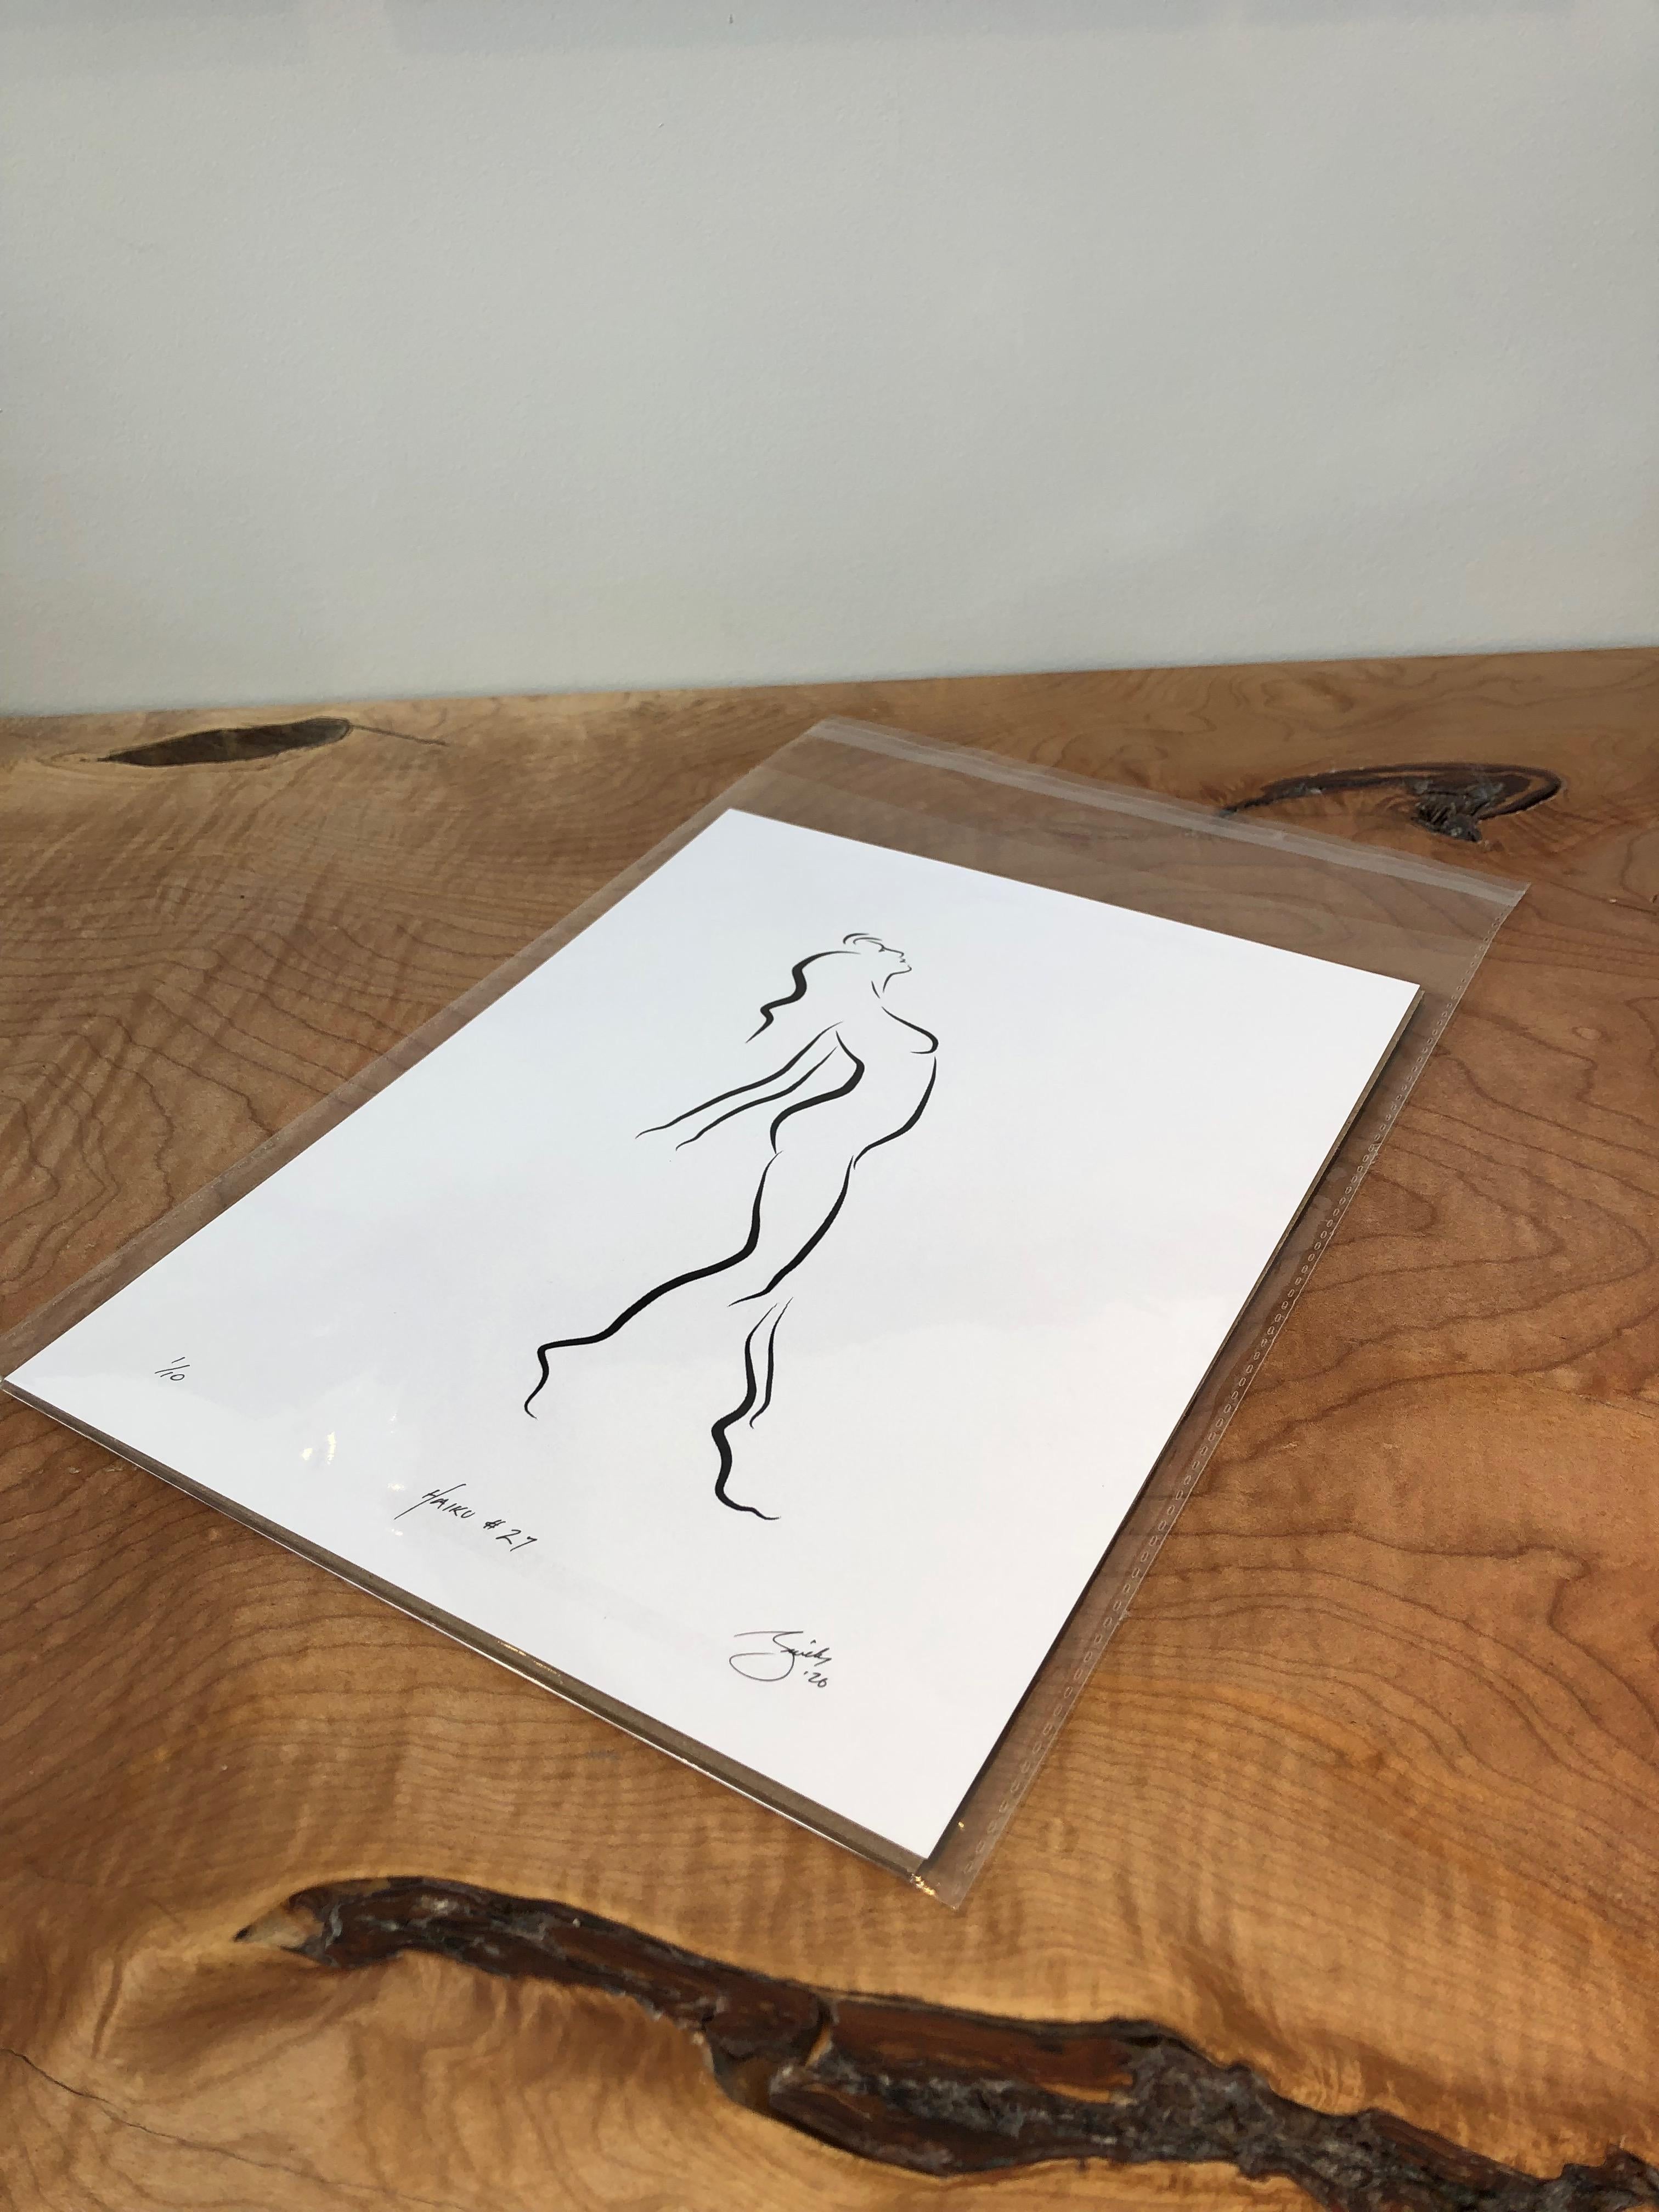 Haiku #27 - Digital Vector Drawing Leaning Female Nude Woman Figure on Table - Contemporary Art by Michael Binkley